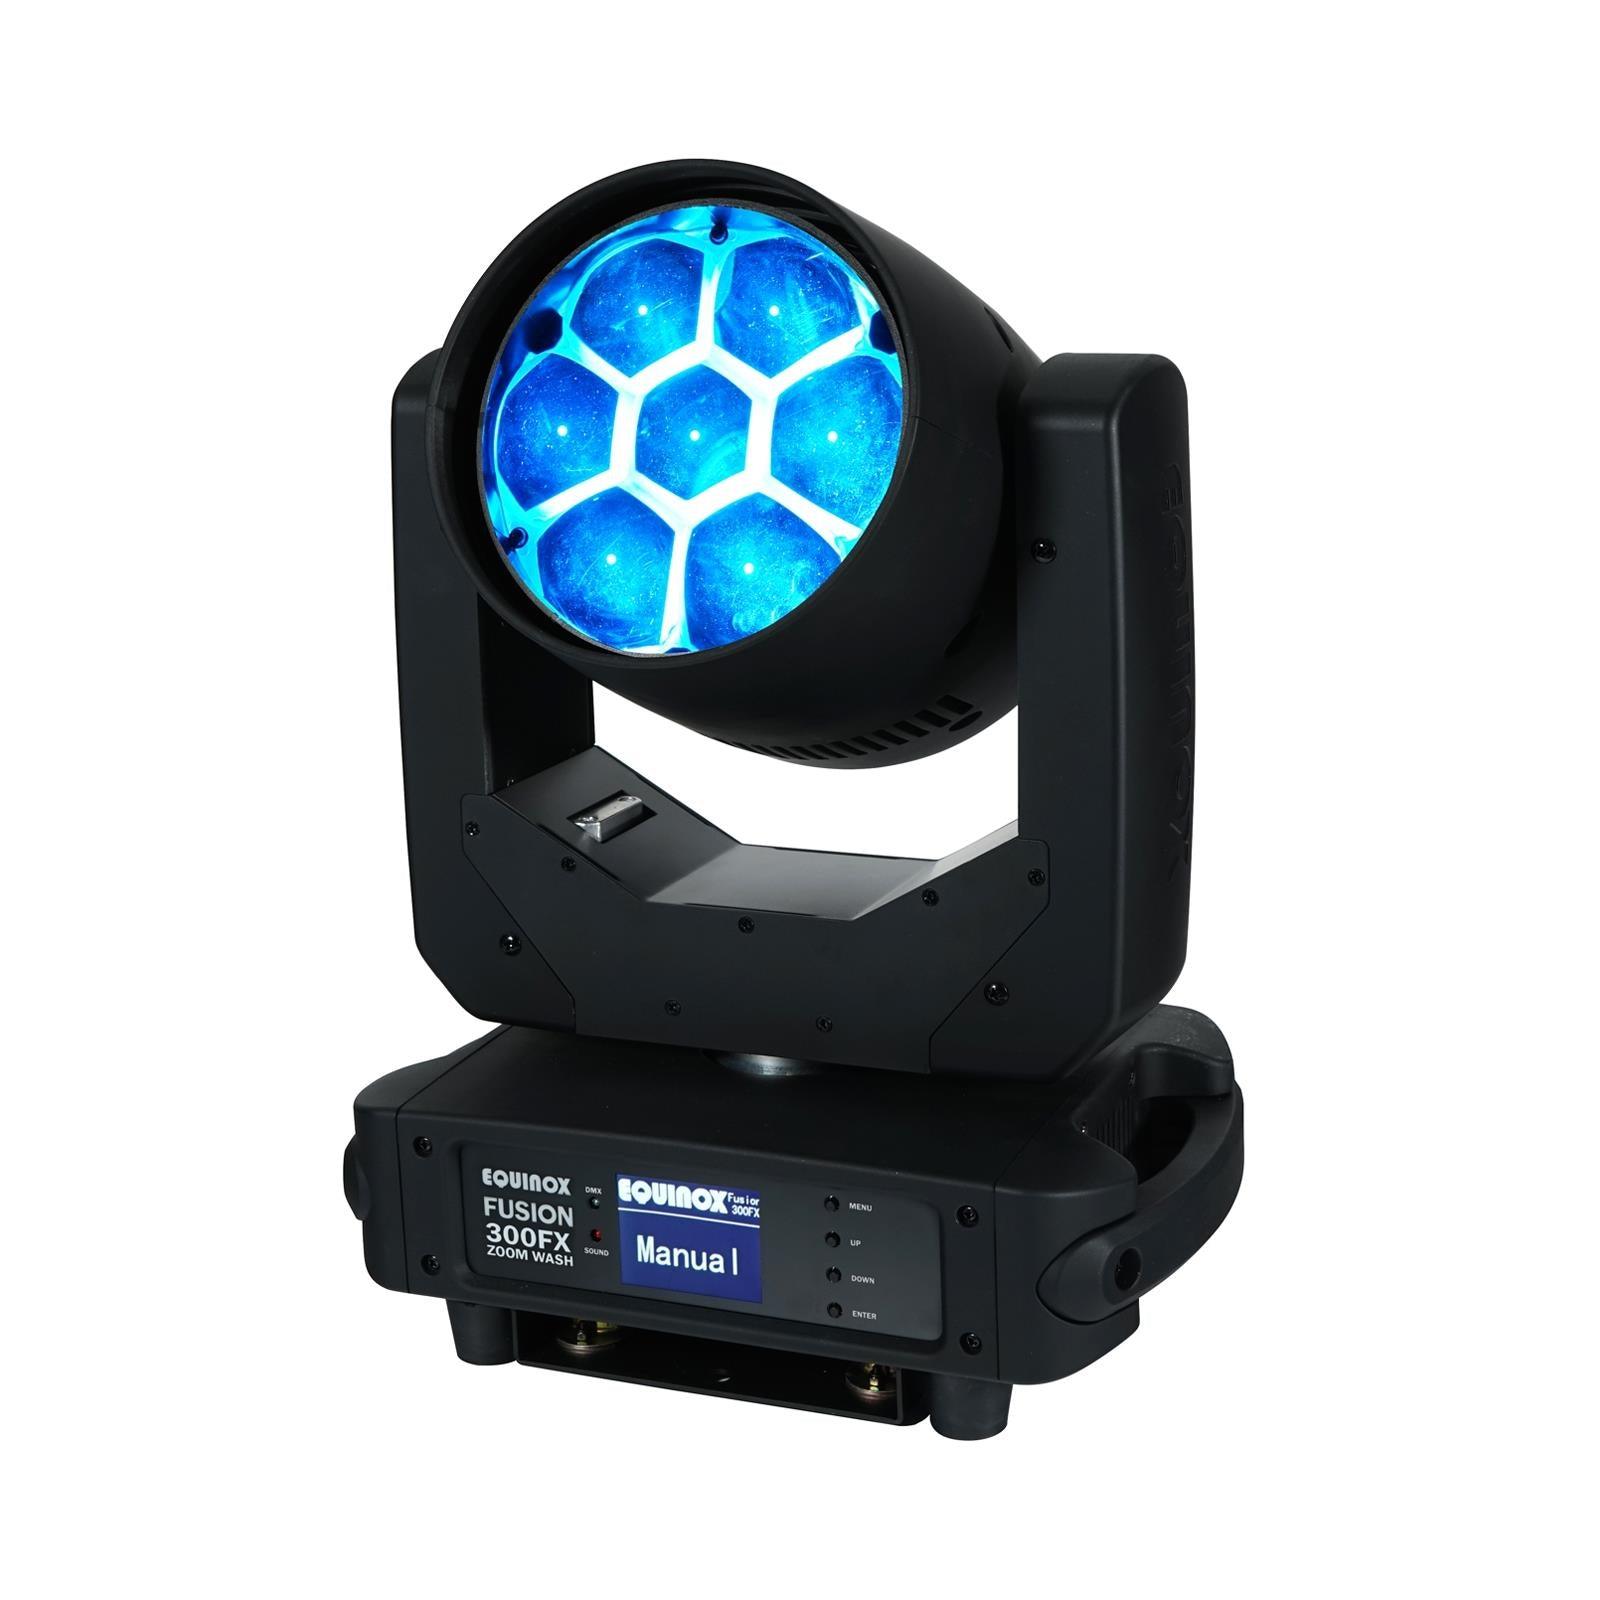 Equinox Fusion 300FX Zoom Wash Moving Head - DY Pro Audio